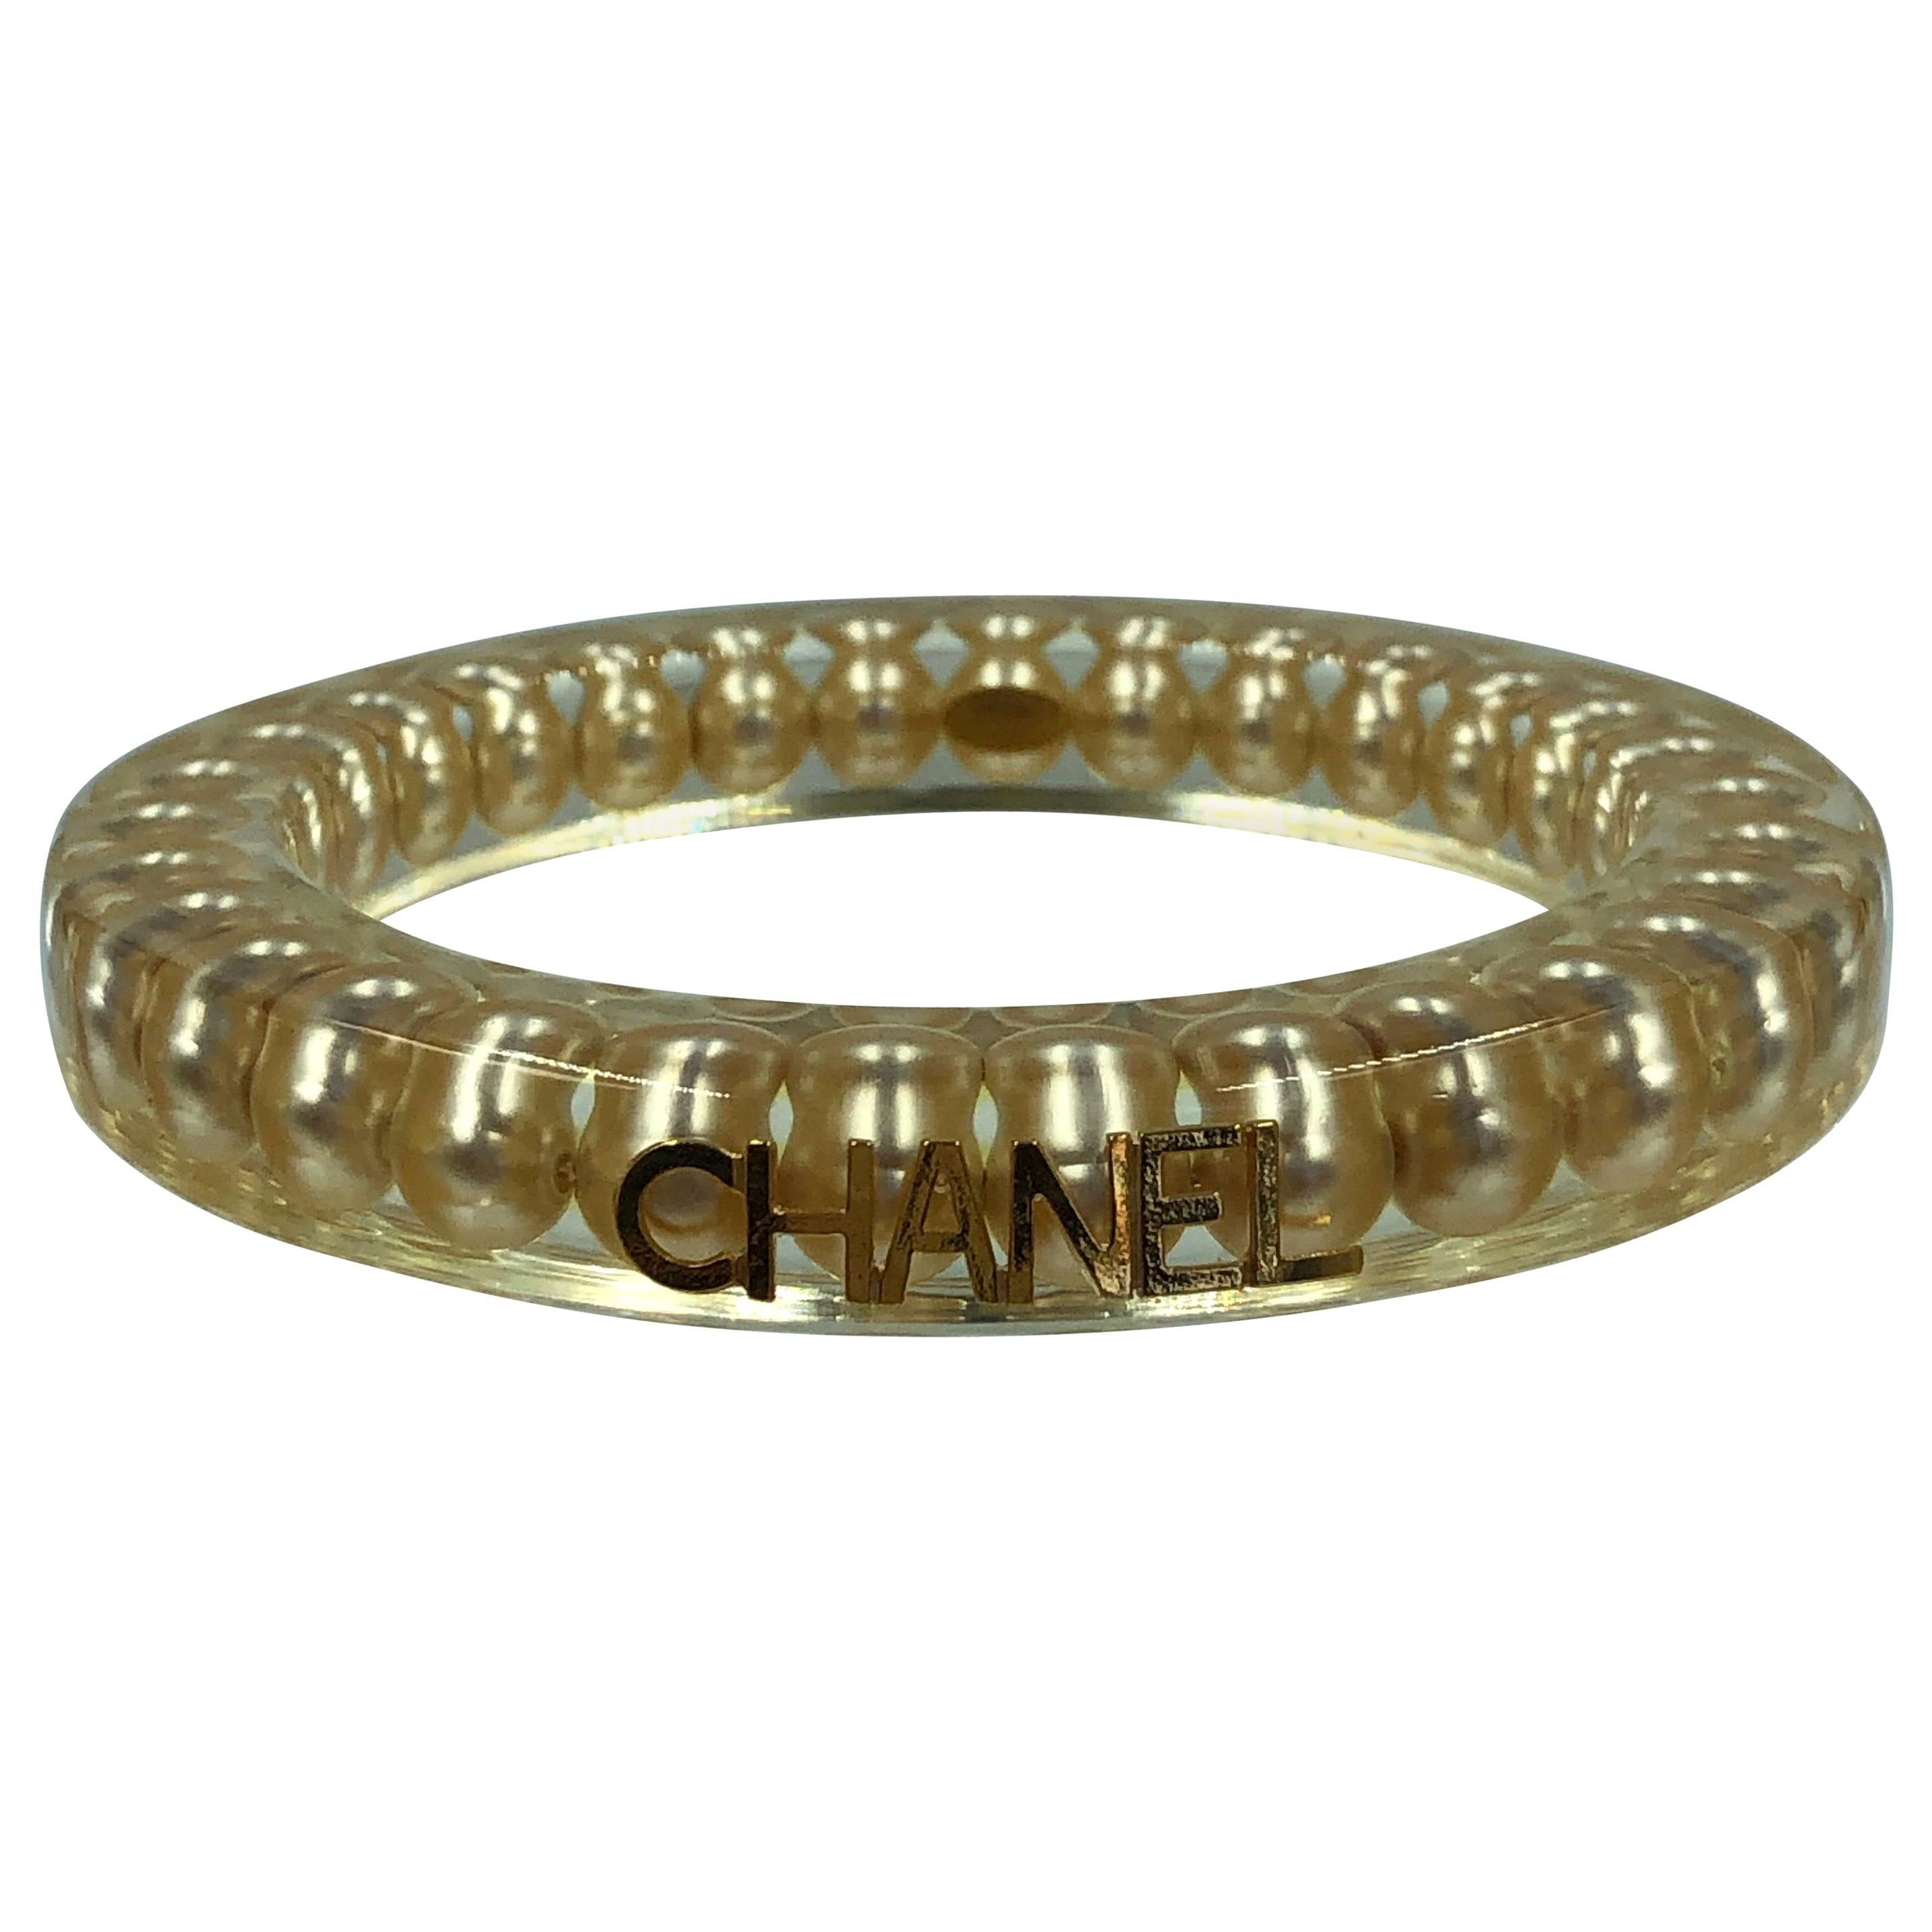 Chanel Rare Authentic Lucite Faux Pearl Bangle Bracelet For Sale